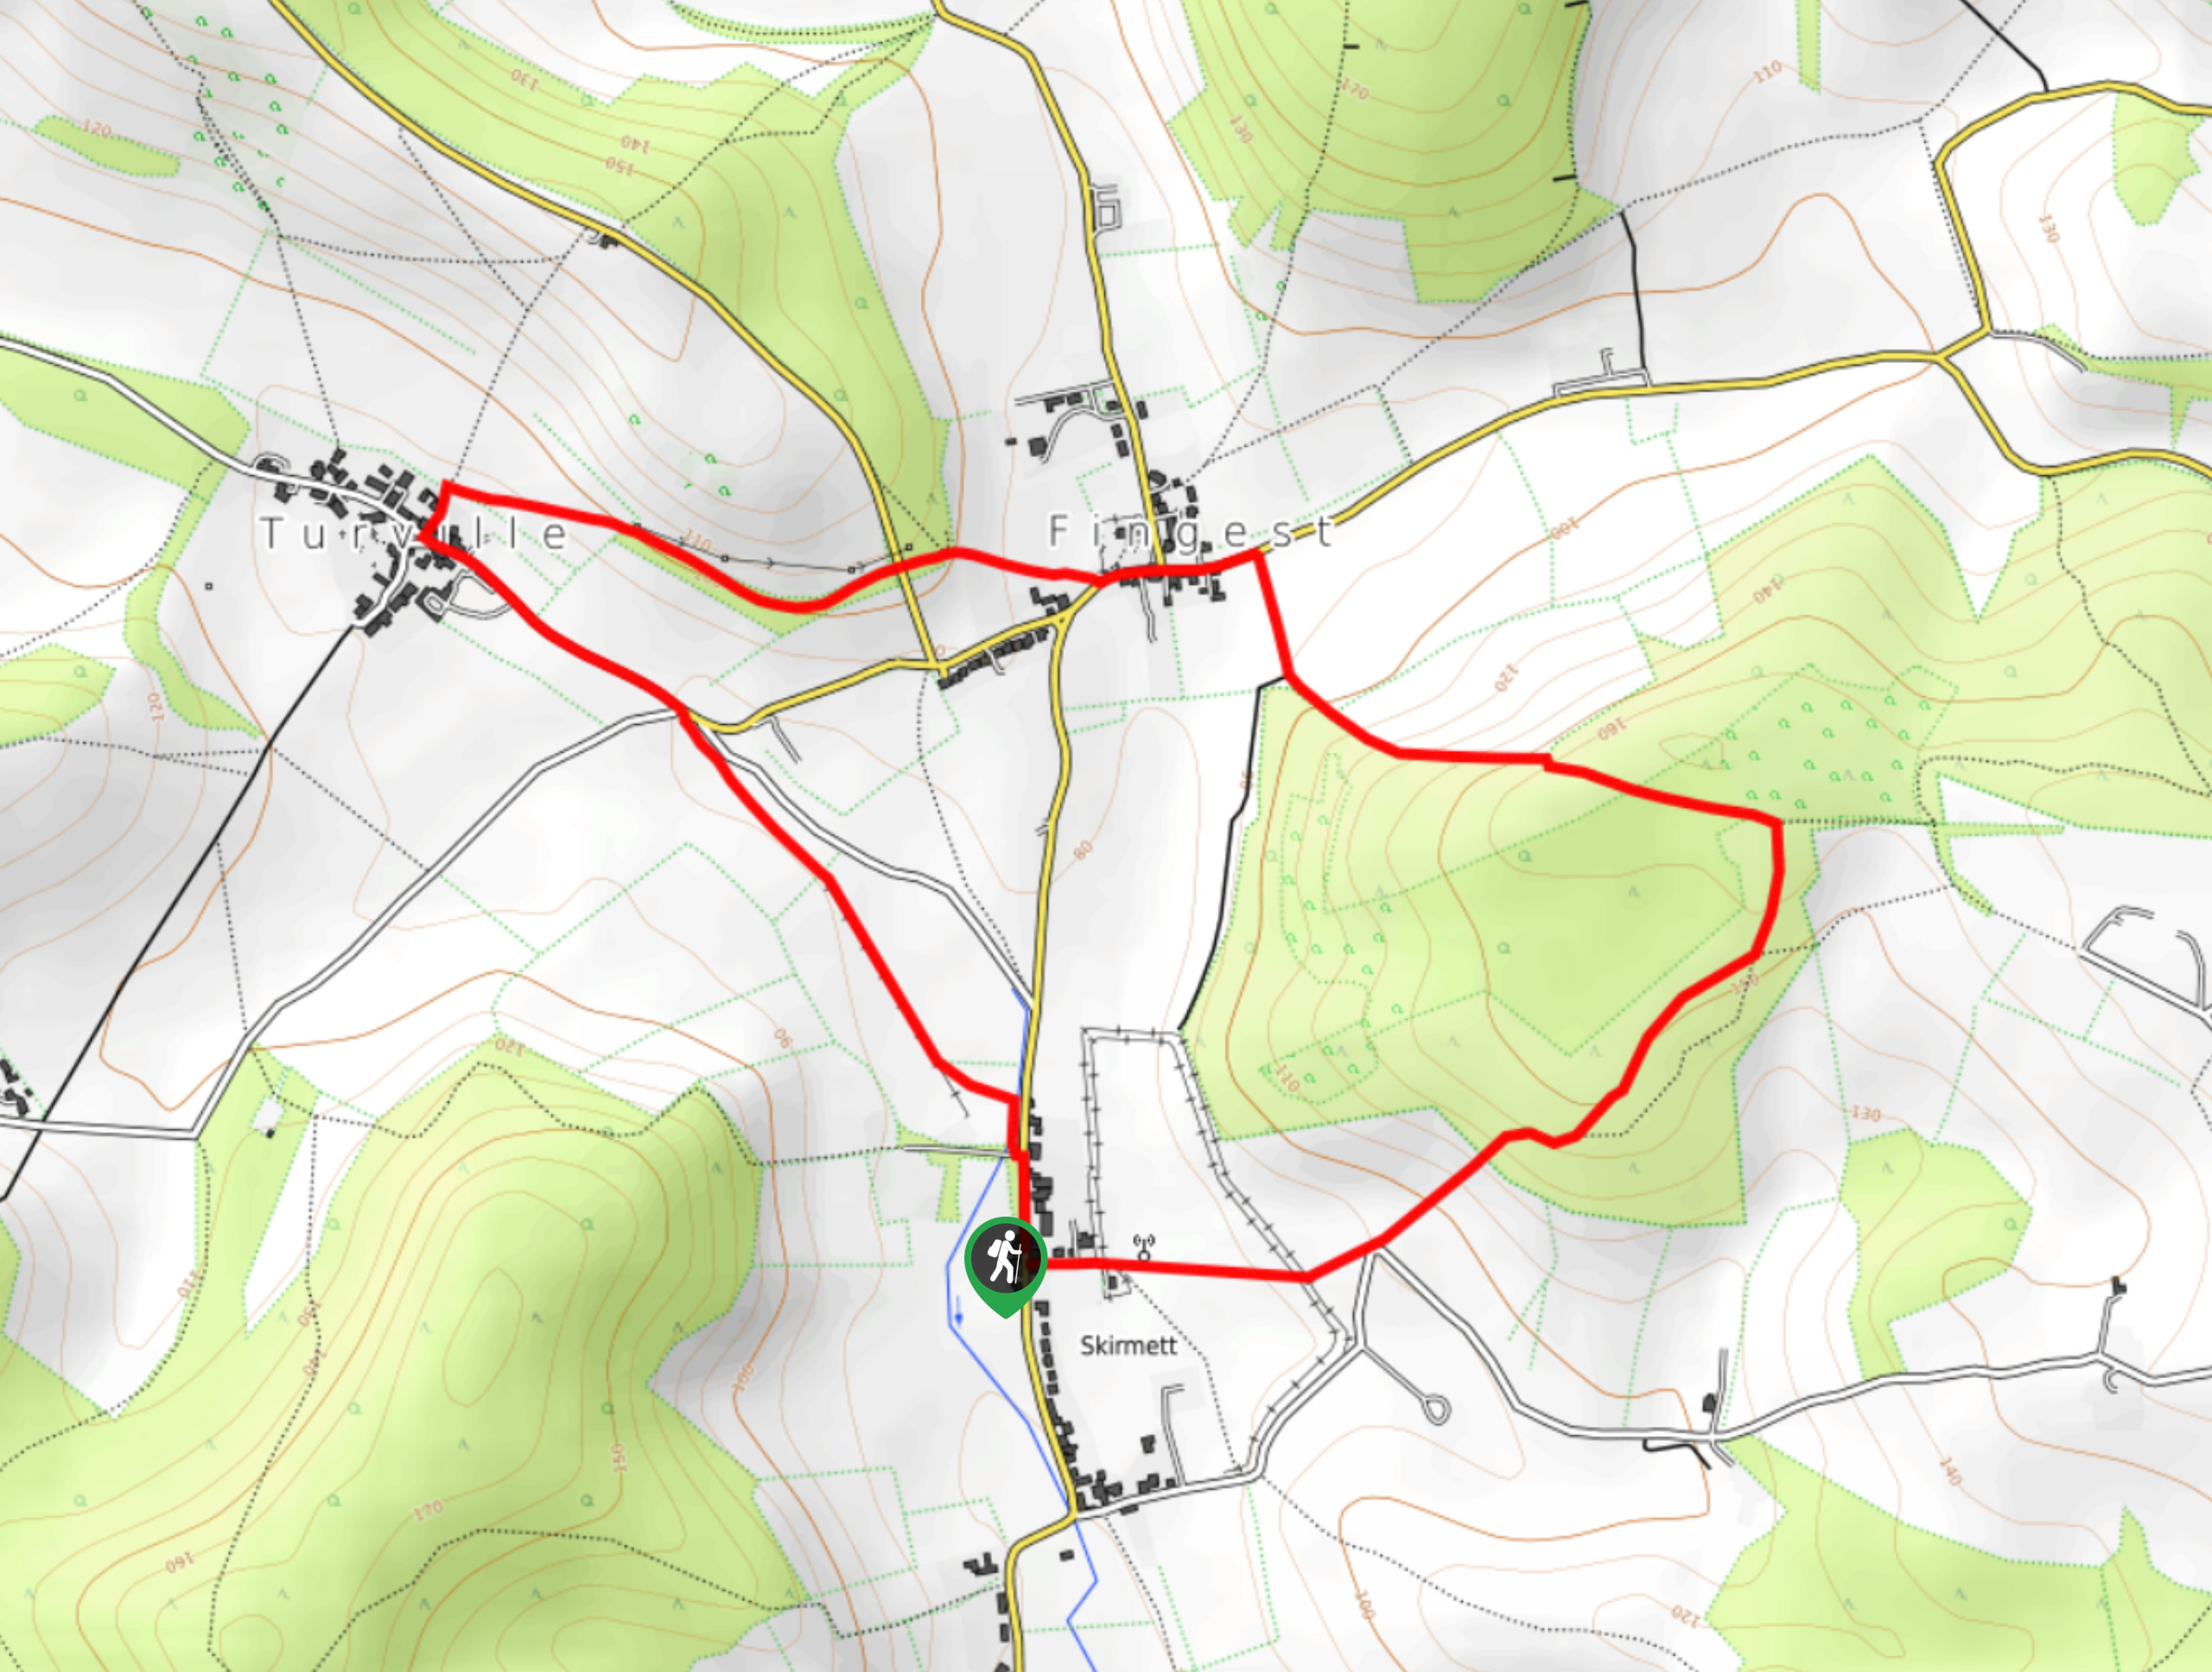 Skirmett, Turville and Fingest Pub Walk Map